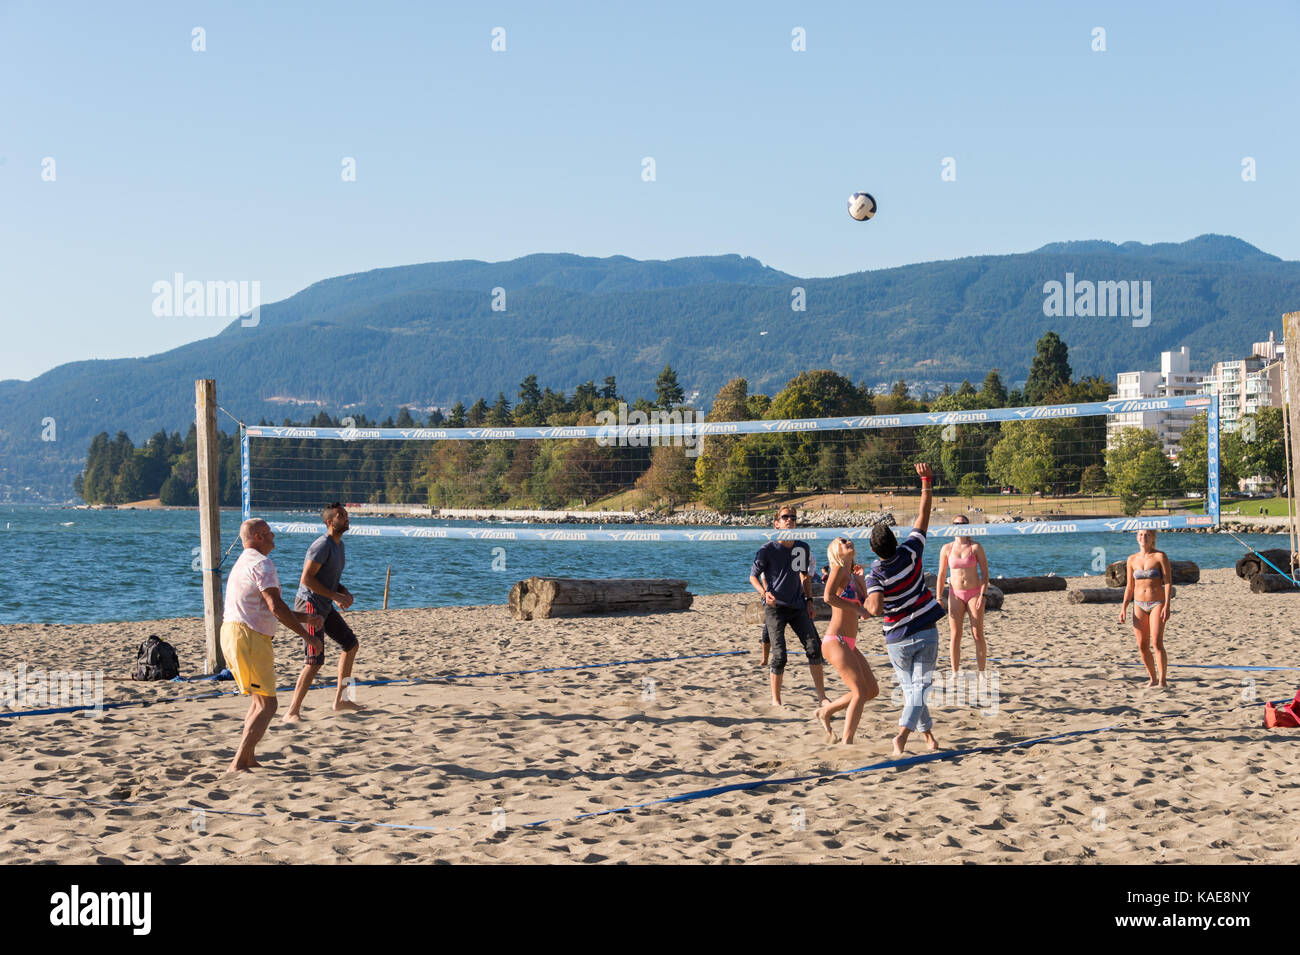 Menschen spielen Beachvolleyball am Vancouver English Bay Beach im Sommer. Vancouver, British Columbia, Kanada - 14 September 2017. Stockfoto